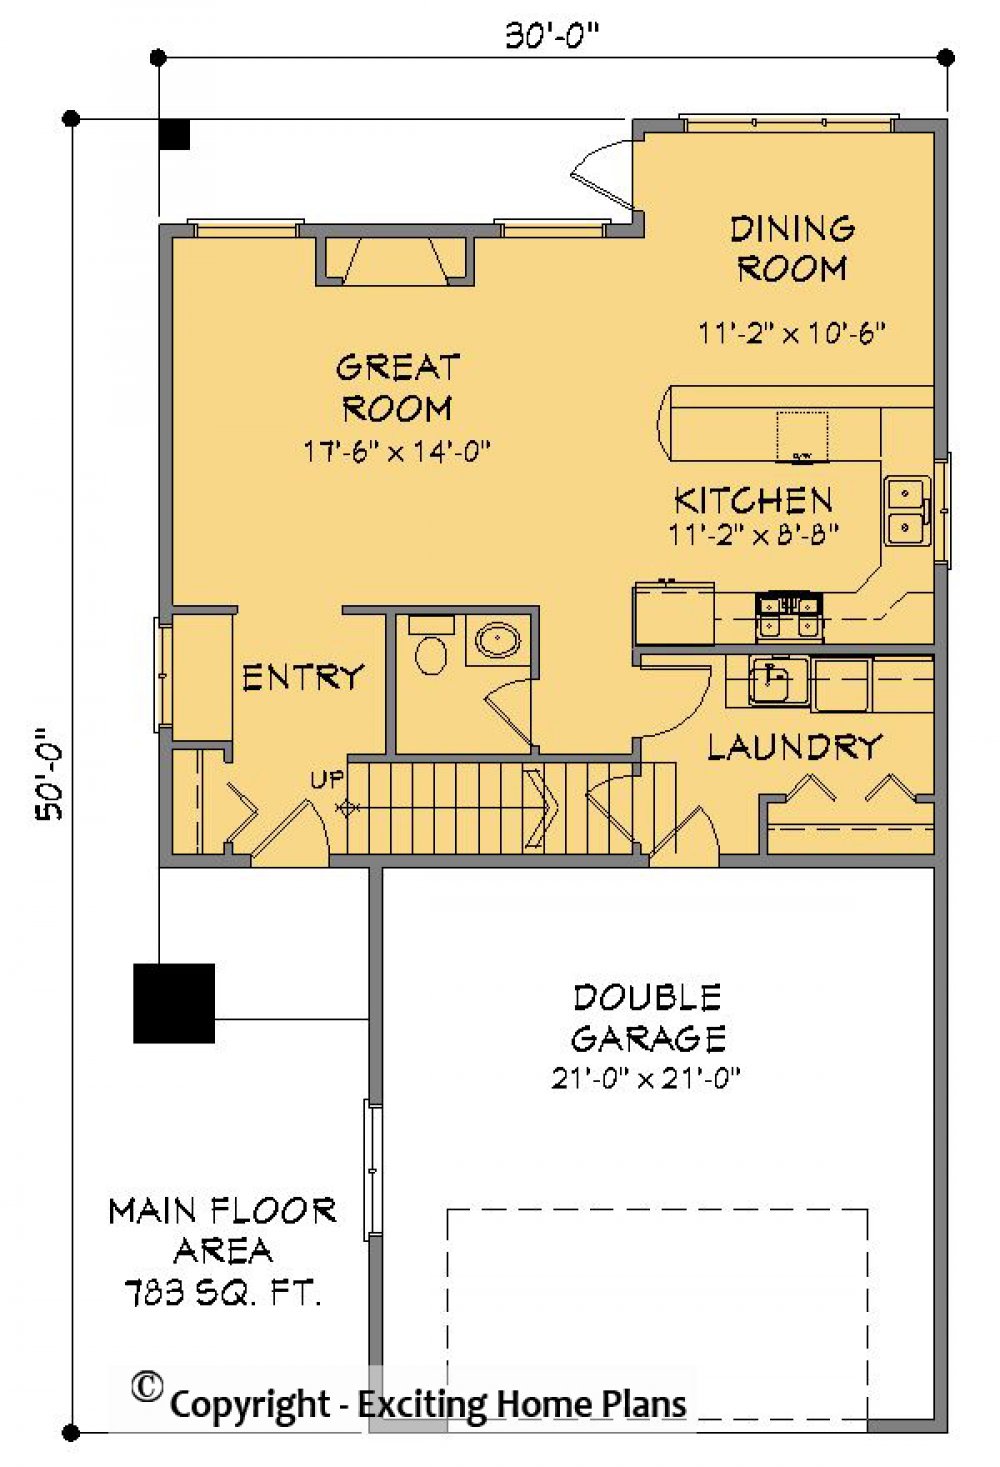 House Plan E1369-10 Main Floor Plan